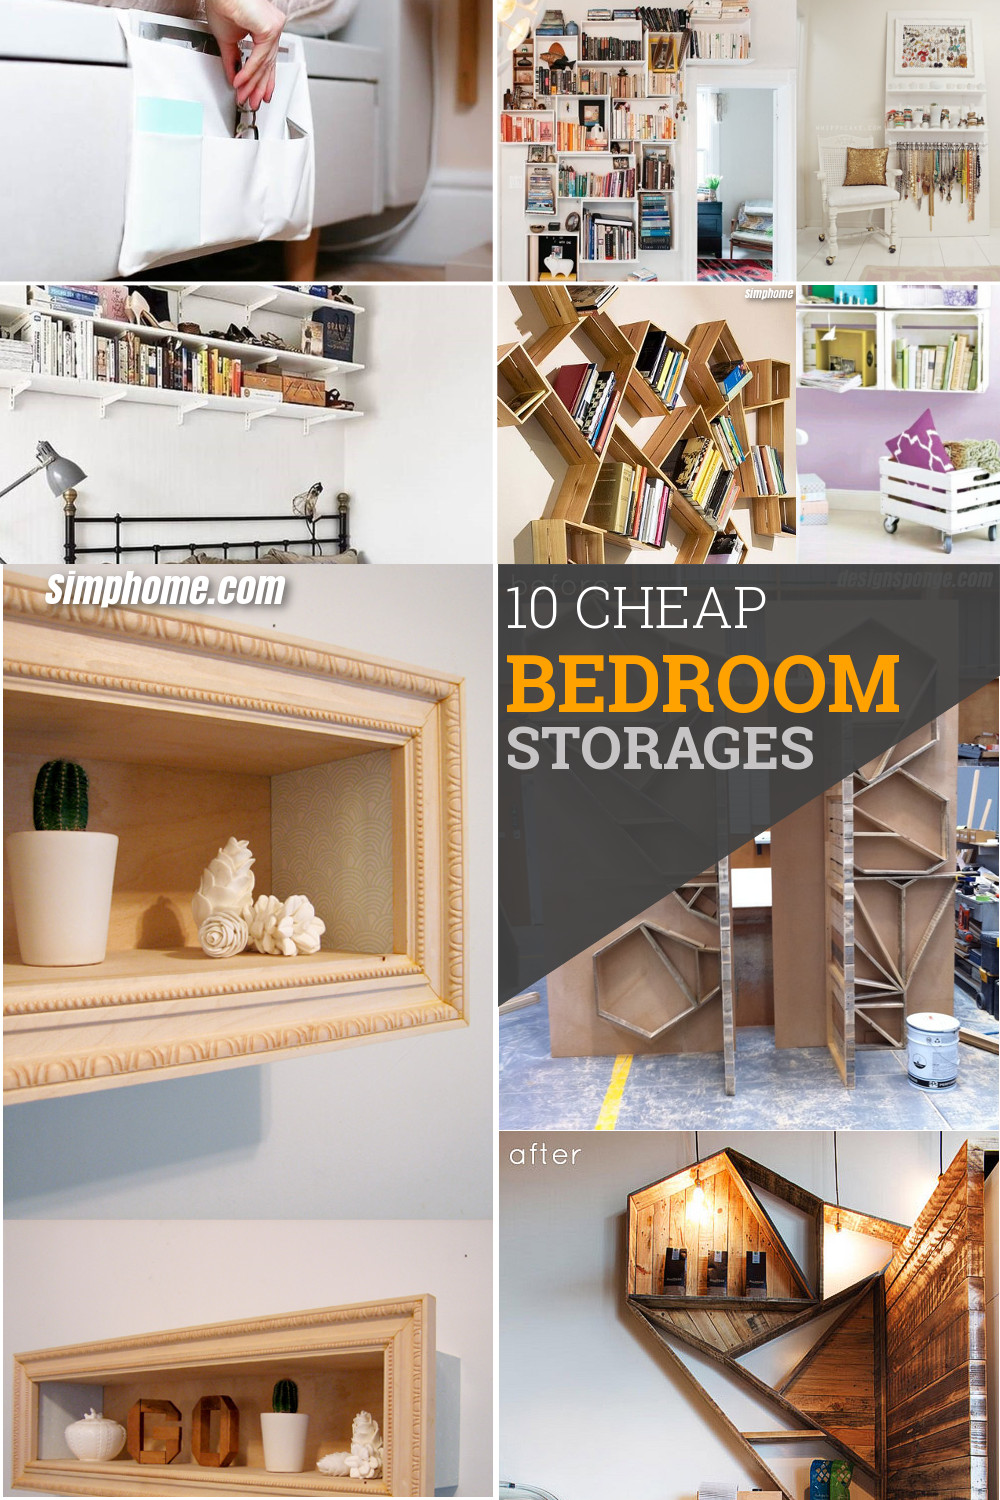 Cheap Bedroom Storage
 10 Cheap Bedroom Storage Ideas Simphome